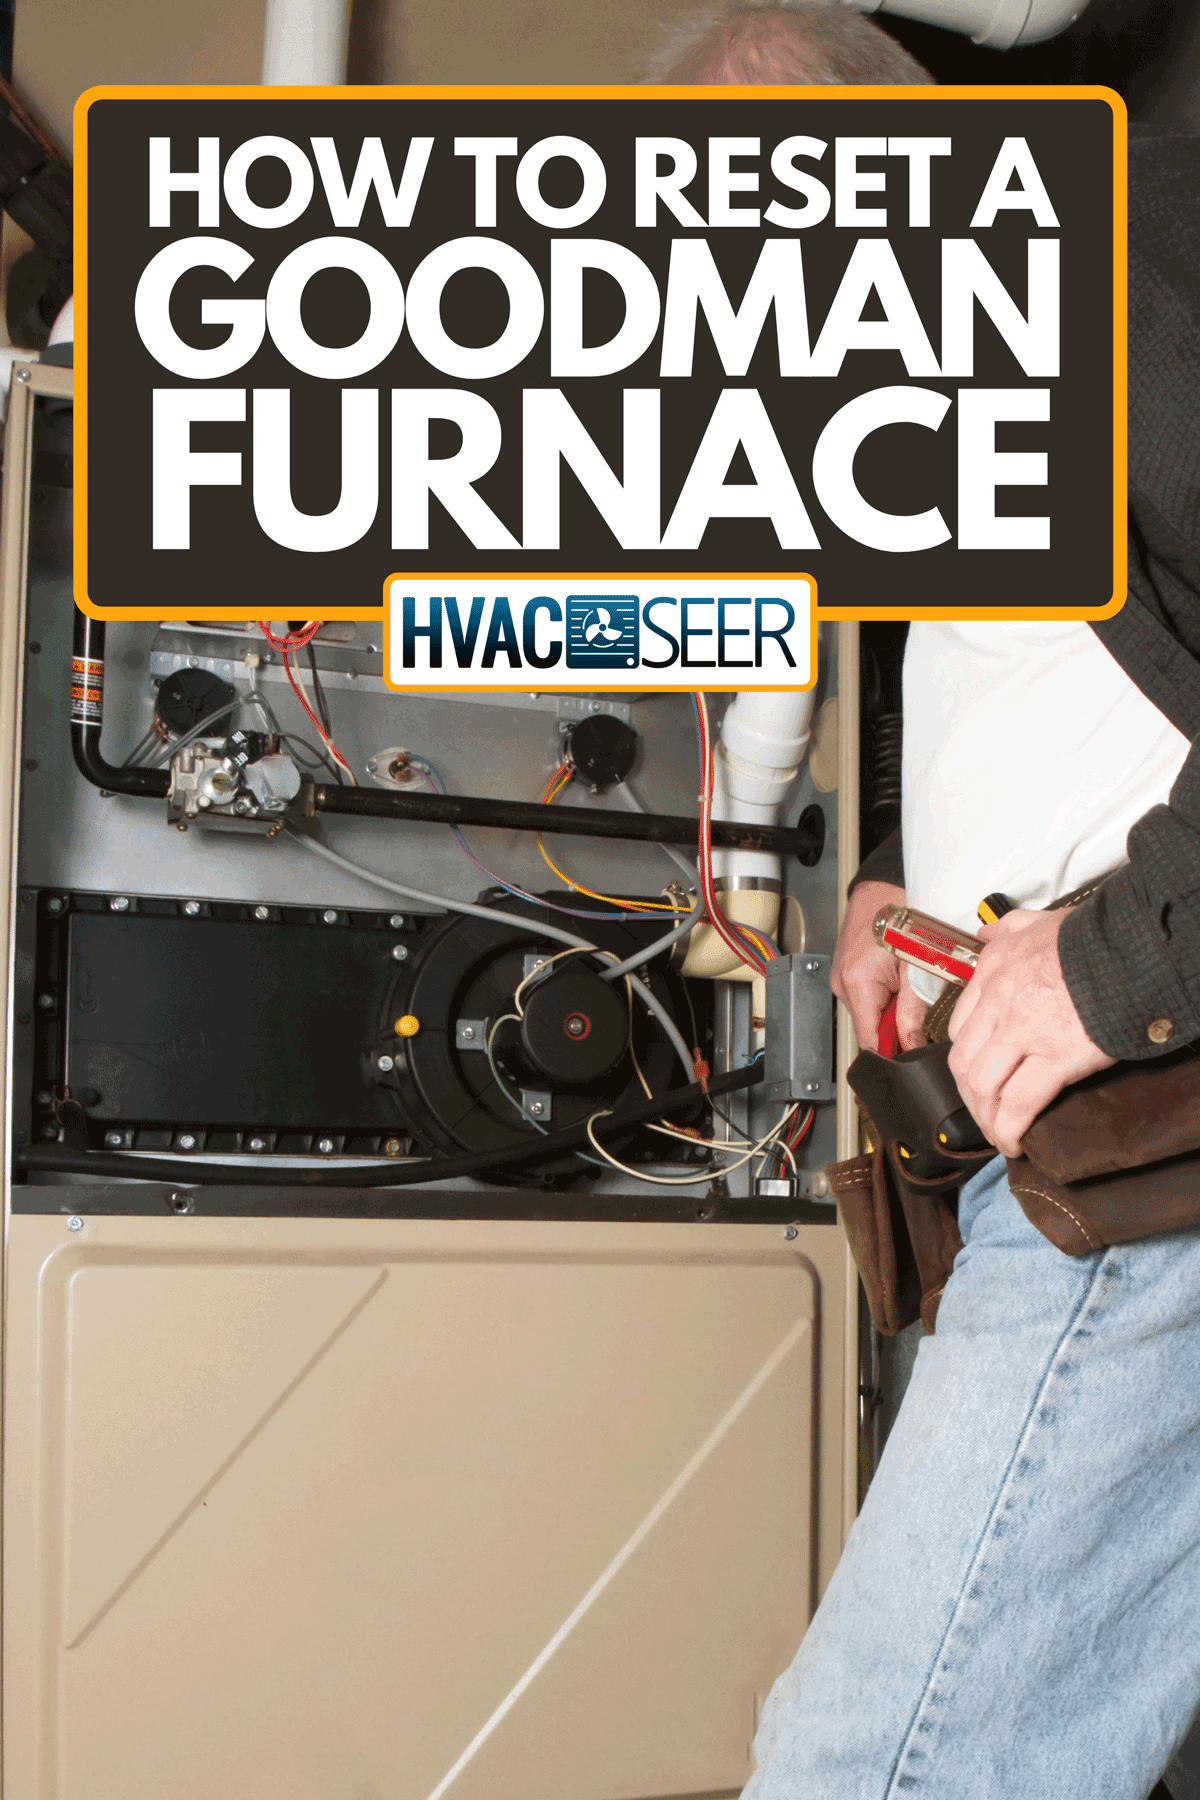 Technician repairing a furnace, How To Reset A Goodman Furnace